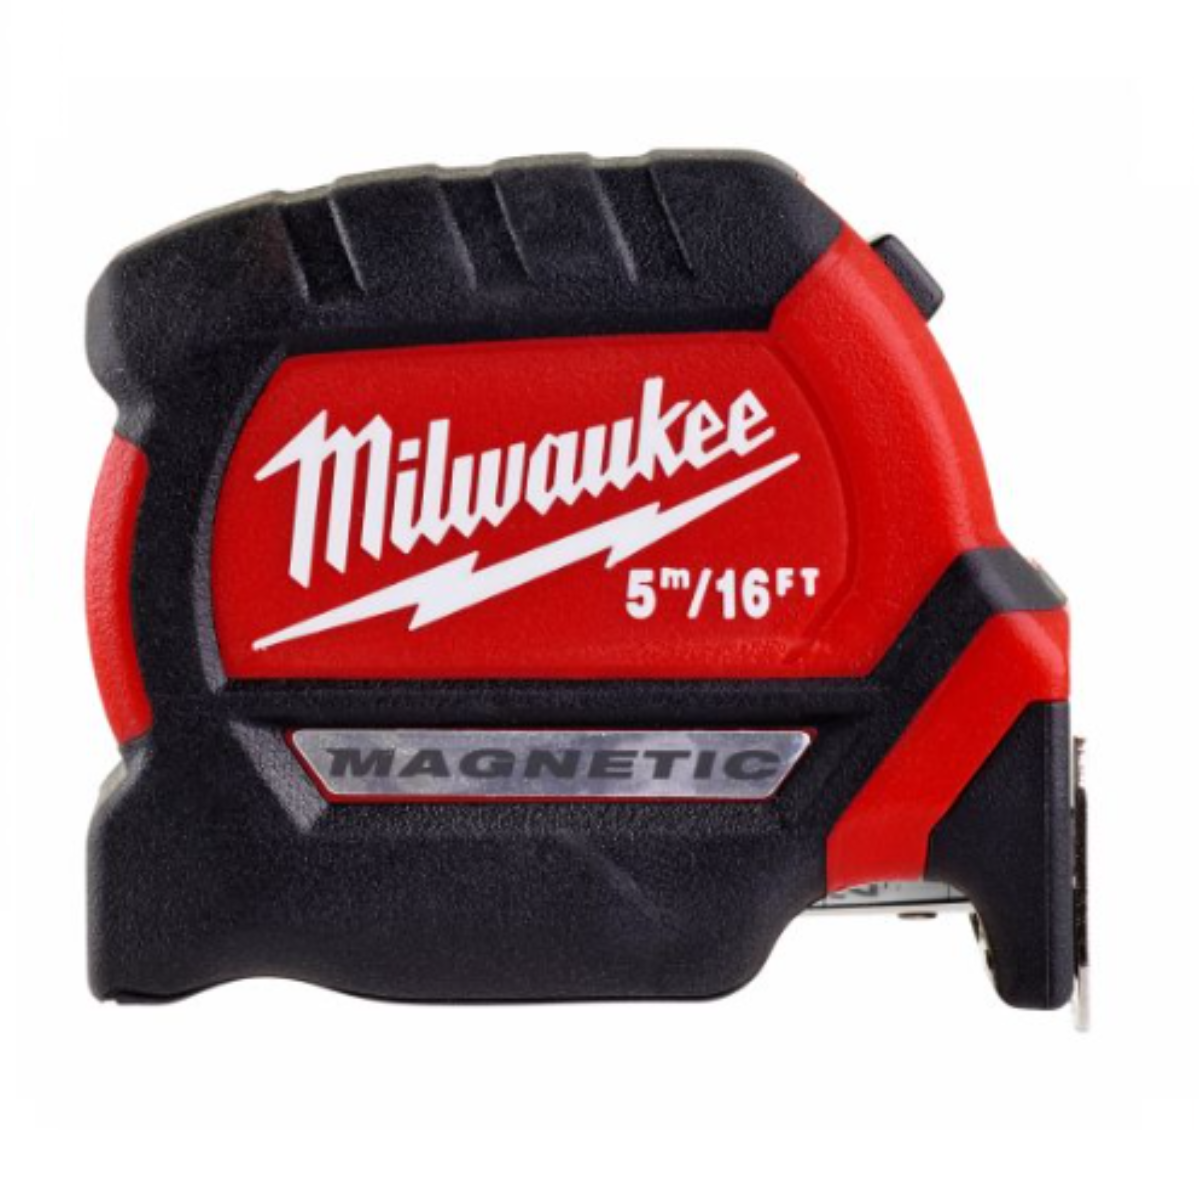 MILWAUKEE 5M/16FT Magnetic Measuring Tape 48-22-0616